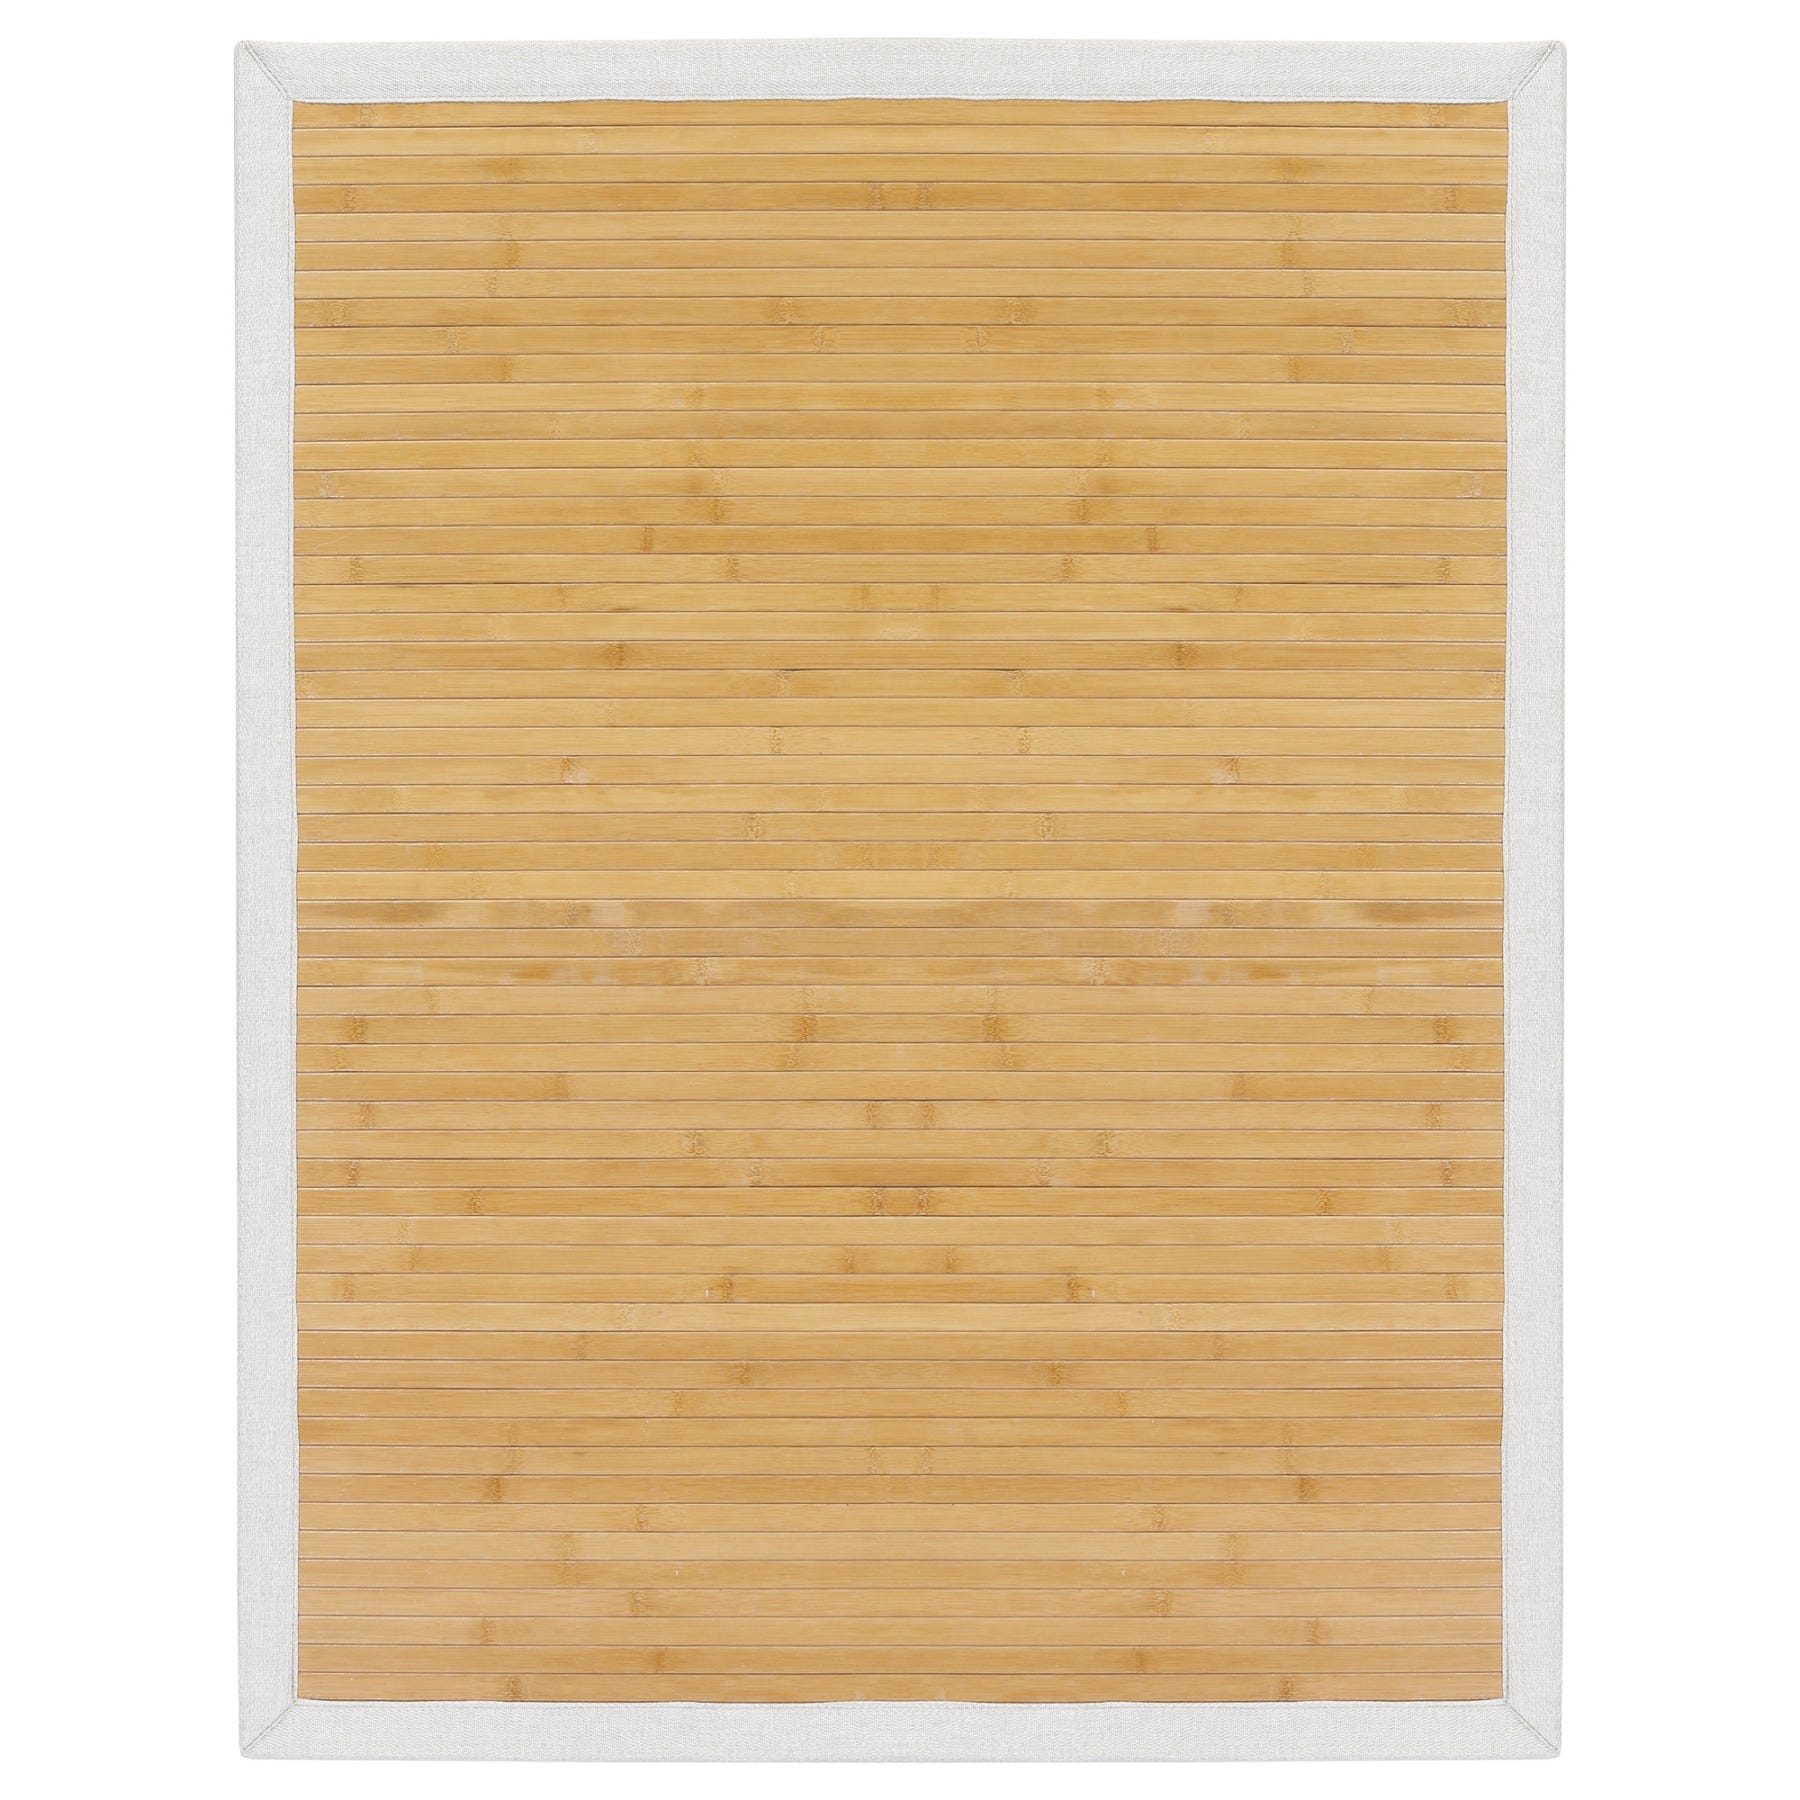 Tapis Bamboe Caramel 200 x 300 cm - tapis en bambou carré - tapis